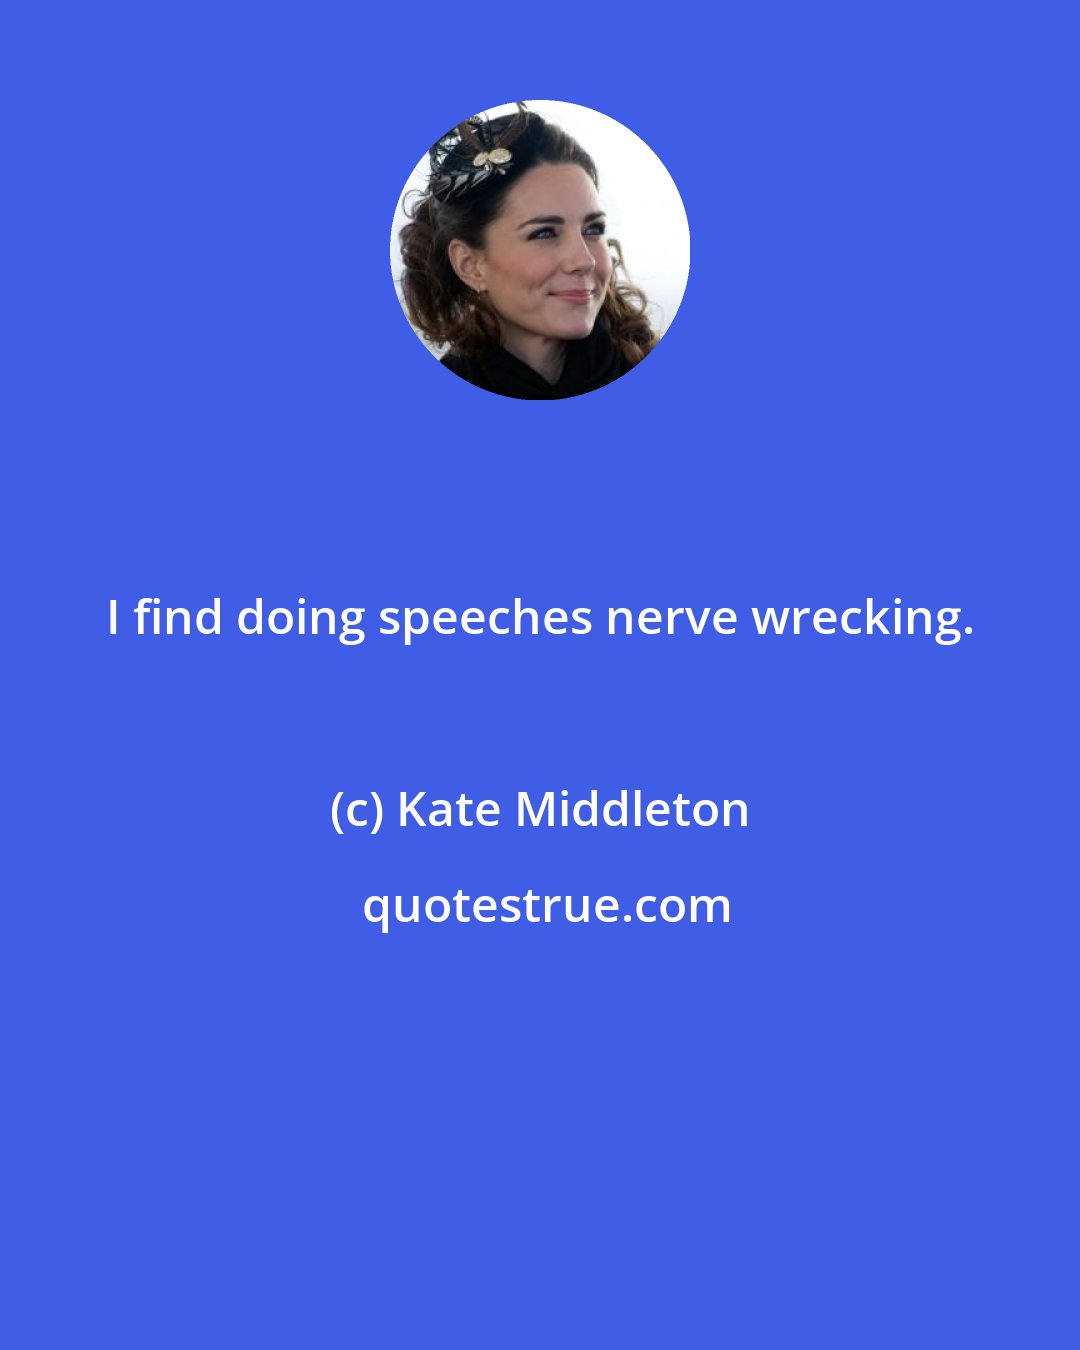 Kate Middleton: I find doing speeches nerve wrecking.